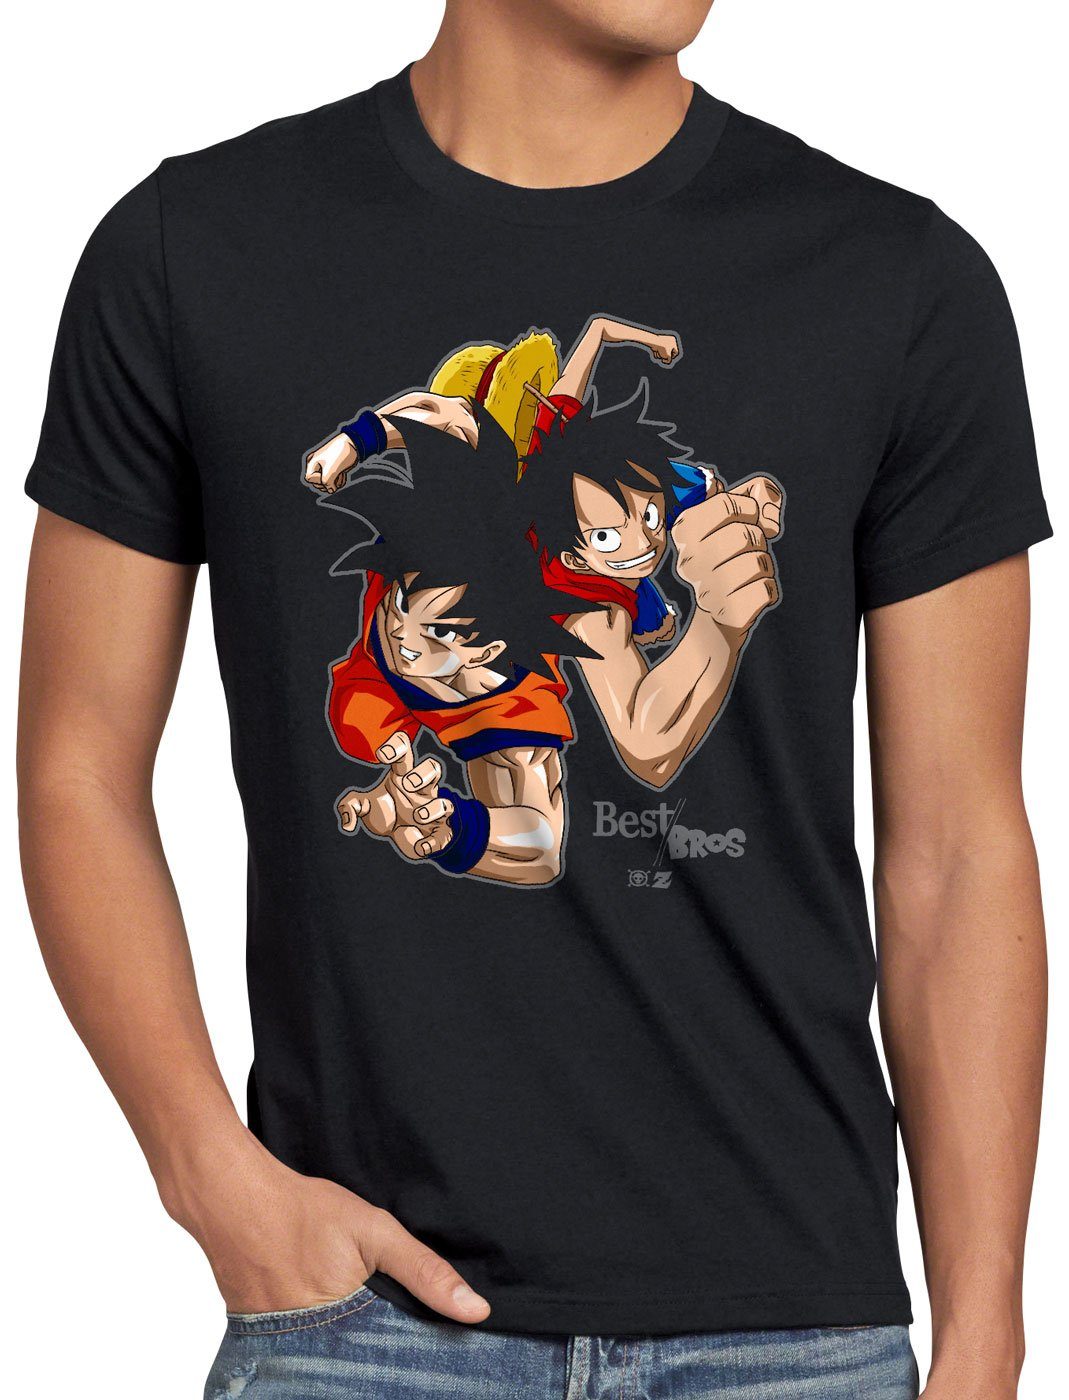 T-Shirt Goku Print-Shirt Ruffy z saiyan - Herren strohhut schwarz Best style3 Bro's